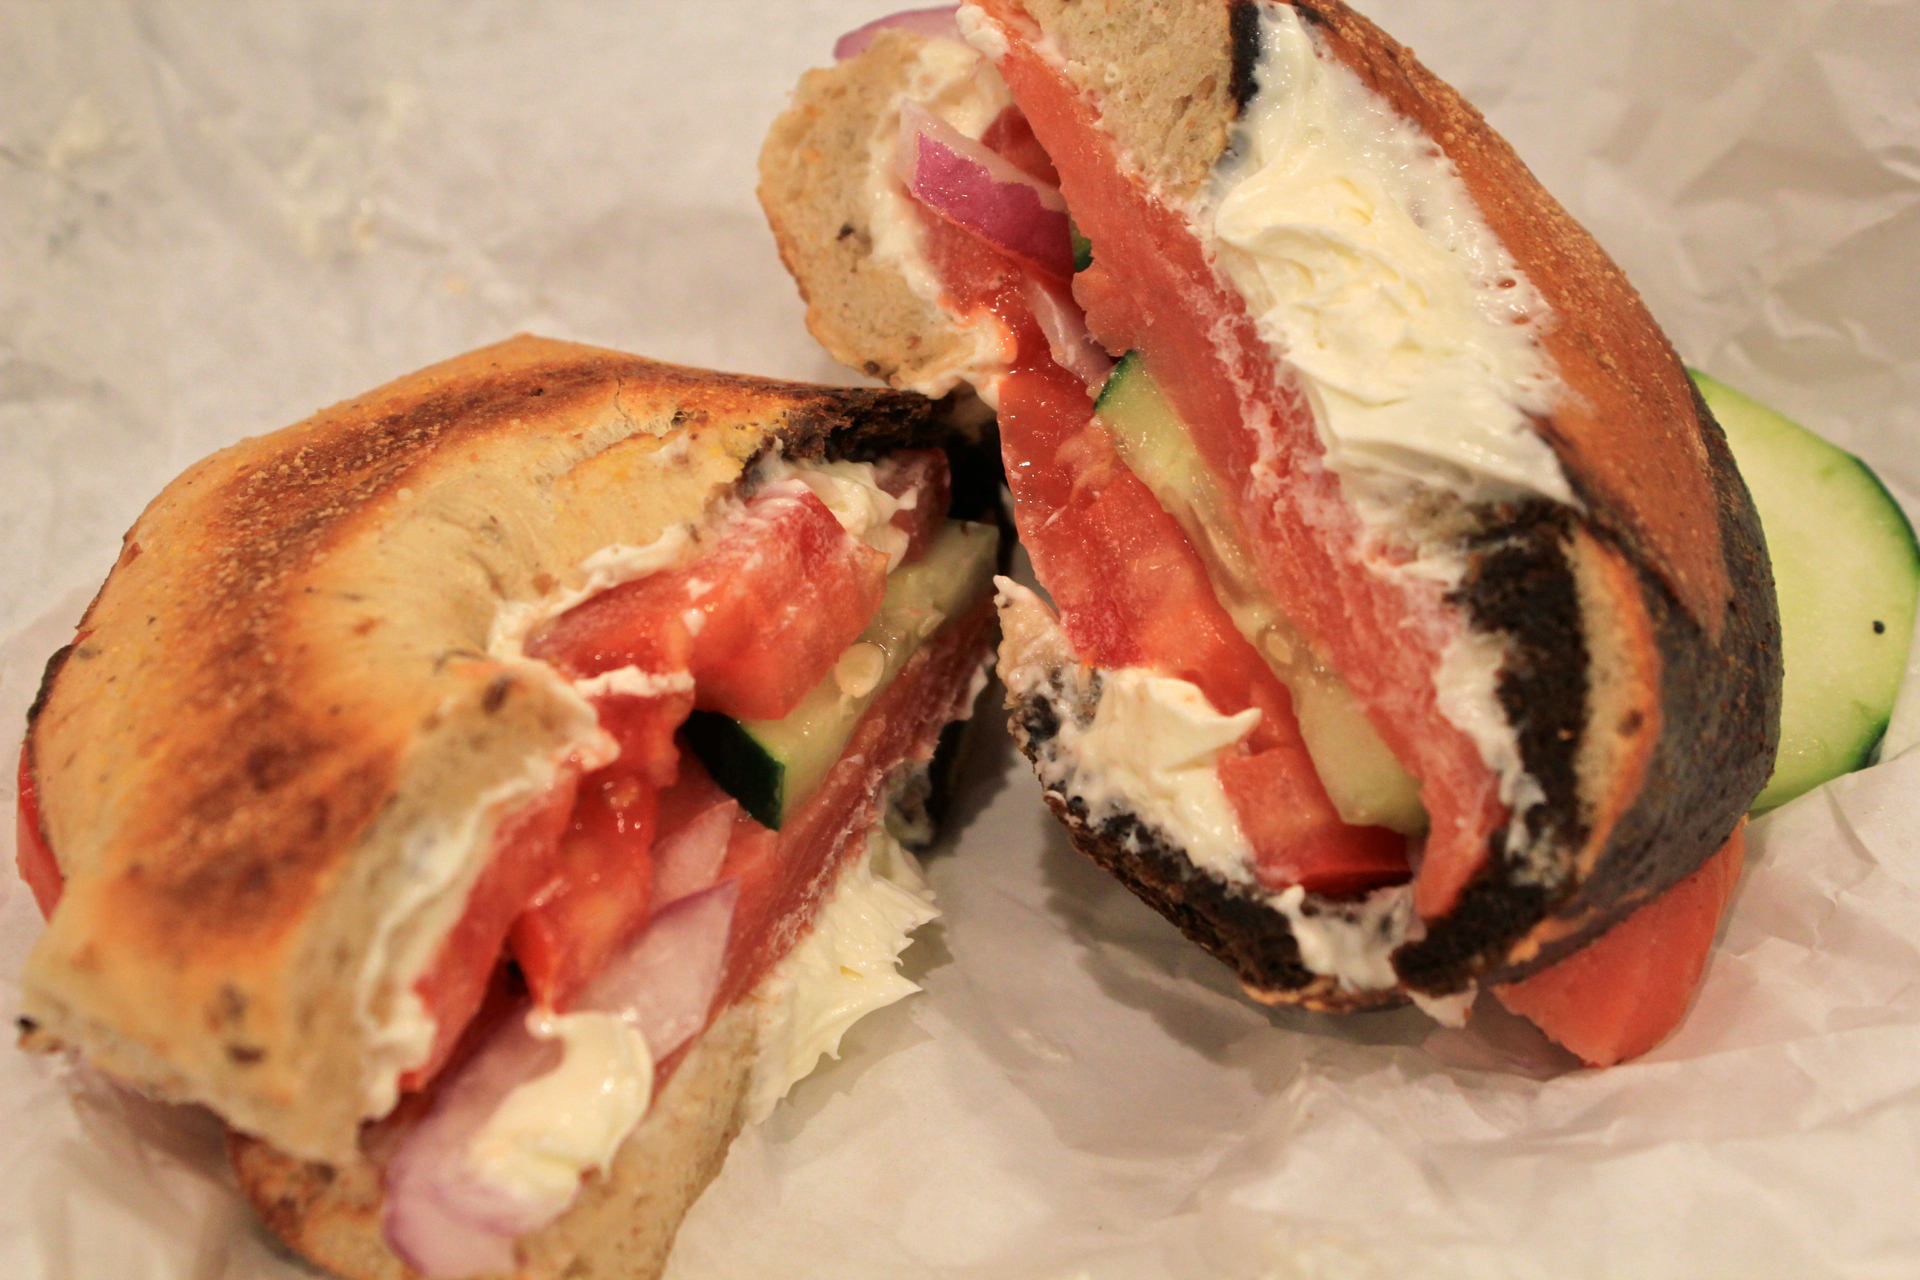 A lox gourmet bagel sandwich at Izzy’s Brooklyn Bagels in Palo Alto.